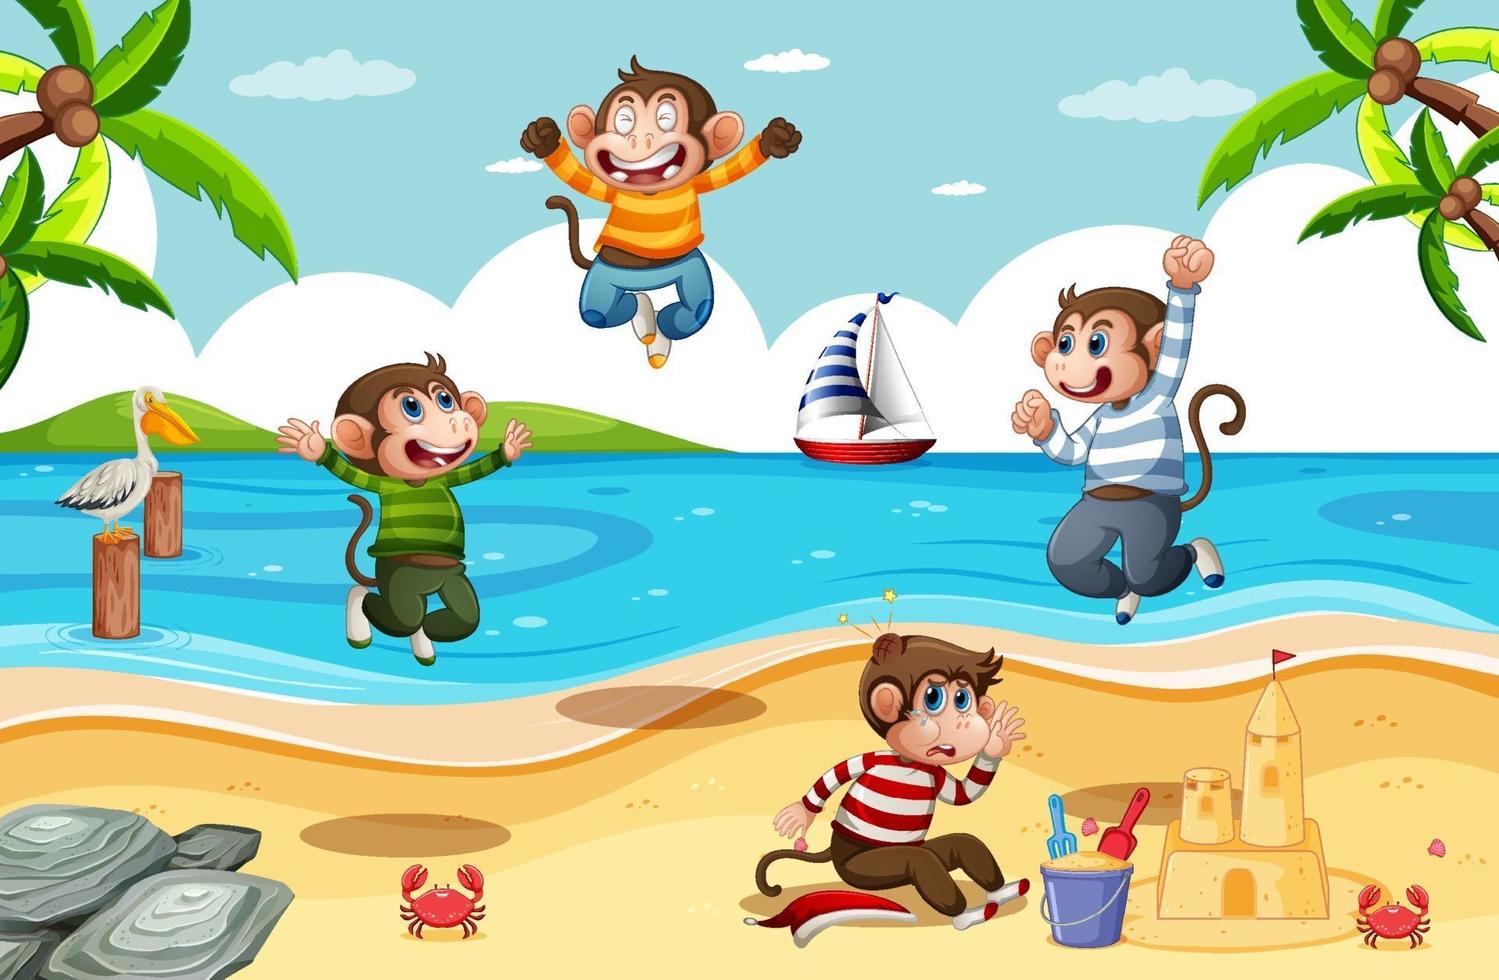 Four little monkeys jumping in the beach scene vector